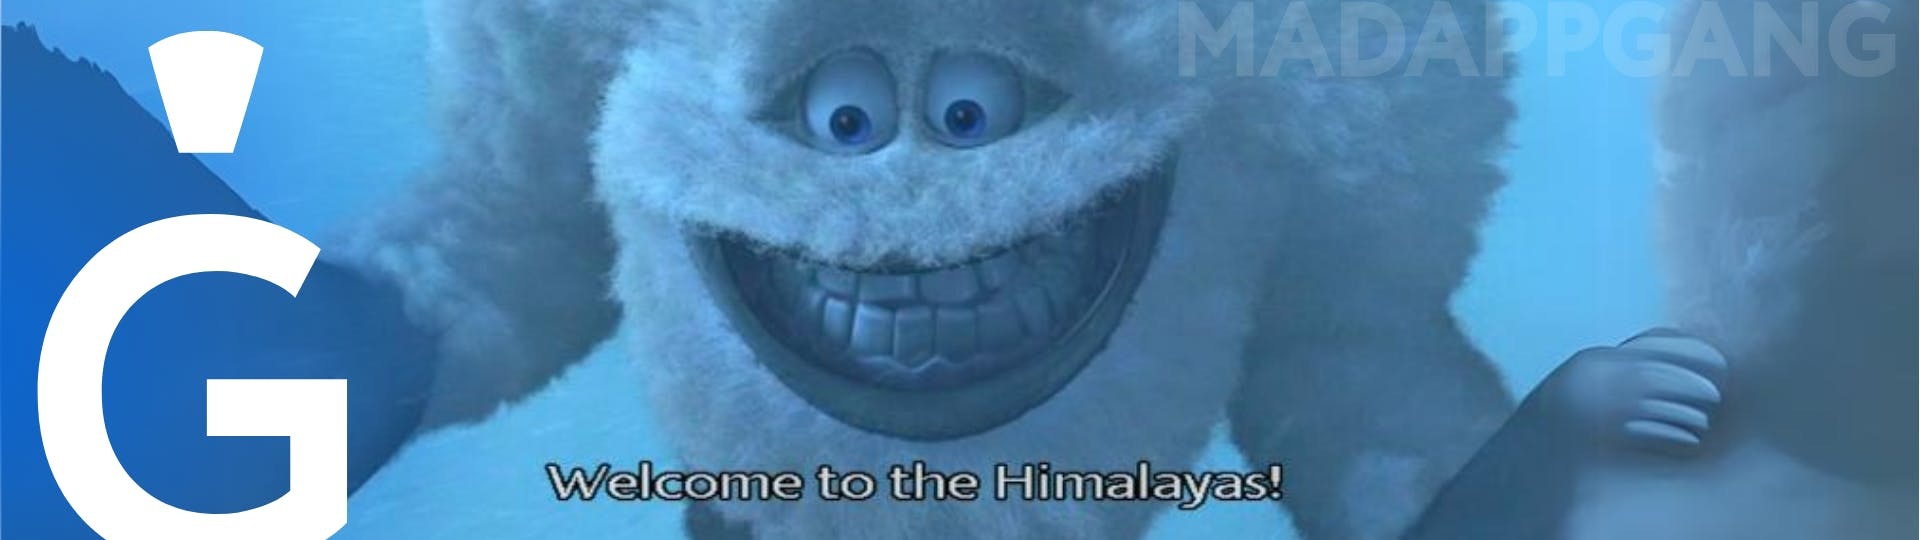 Yeti saying "Welcome to the Himalayas!"